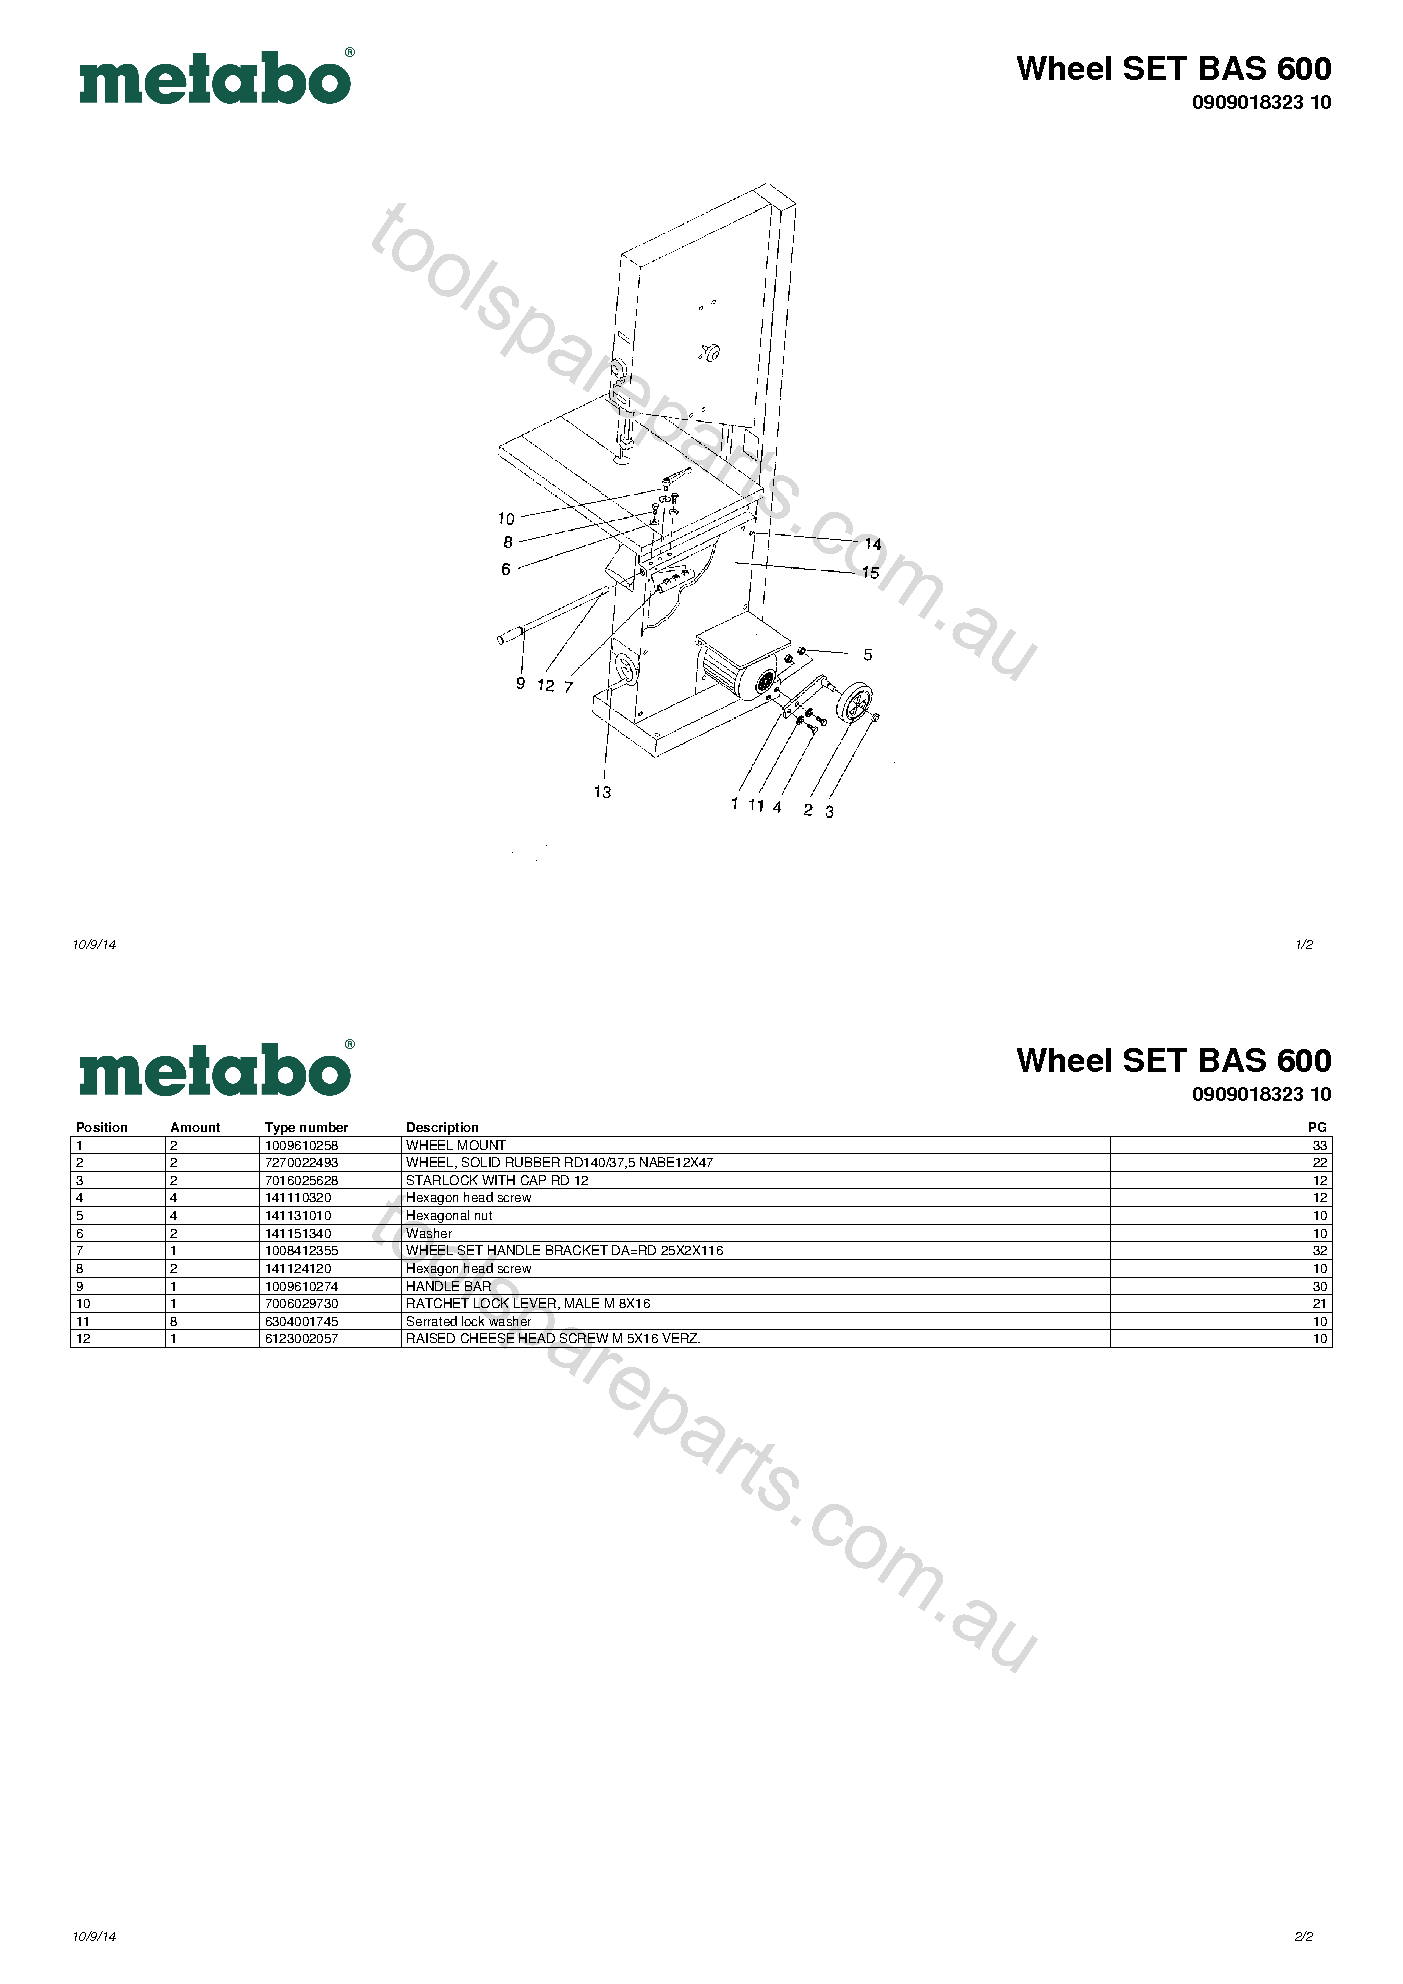 Metabo Wheel SET BAS 600 0909018323 10  Diagram 1